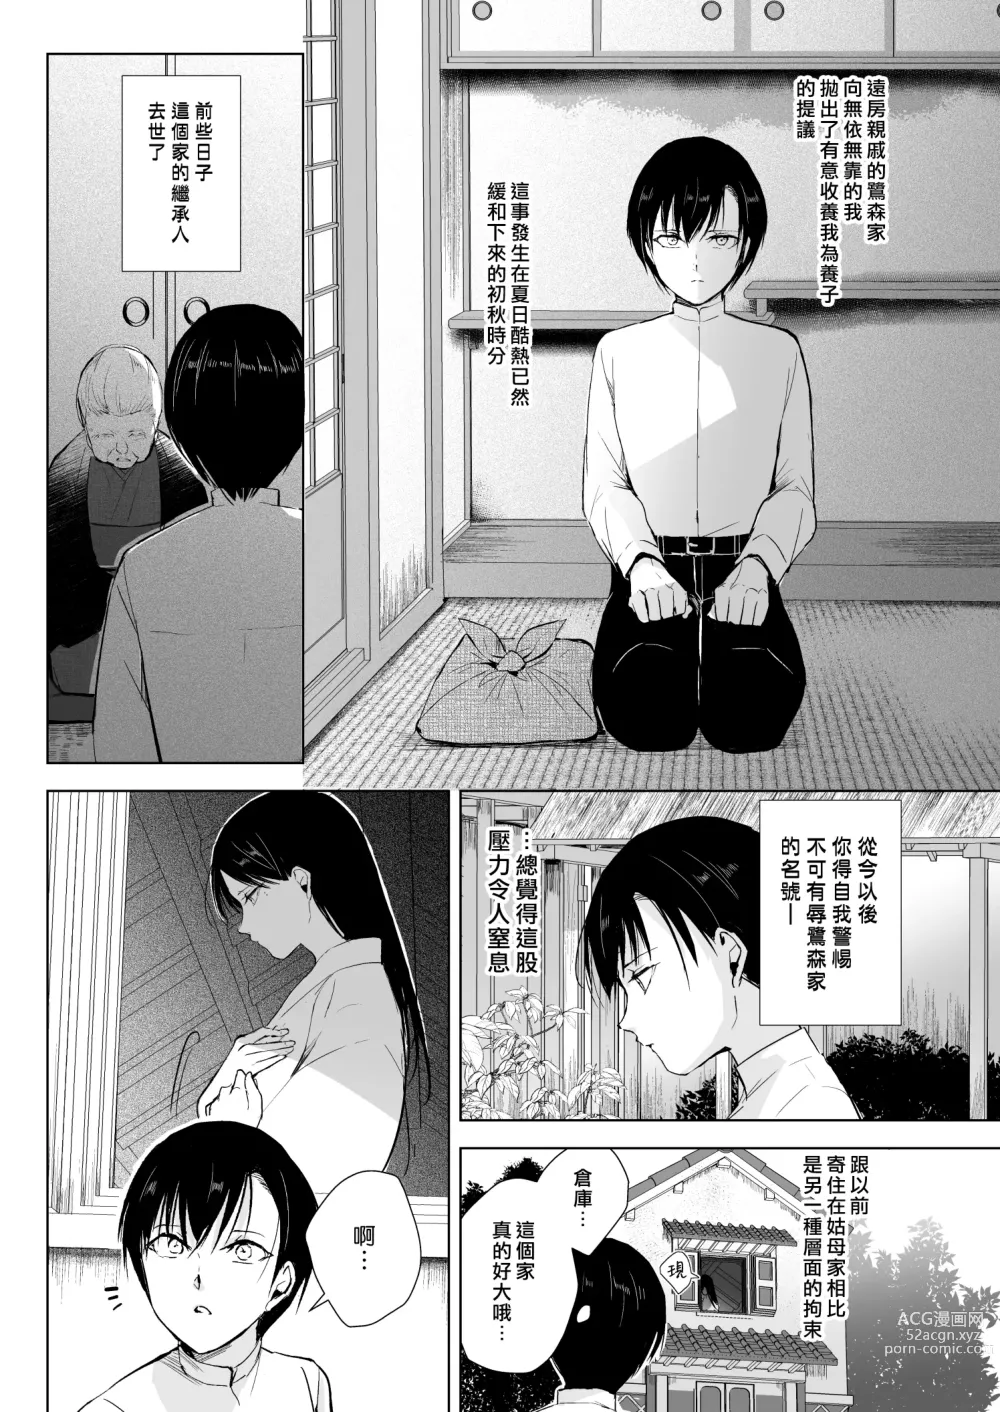 Page 3 of doujinshi 和楓小姐在倉庫裡